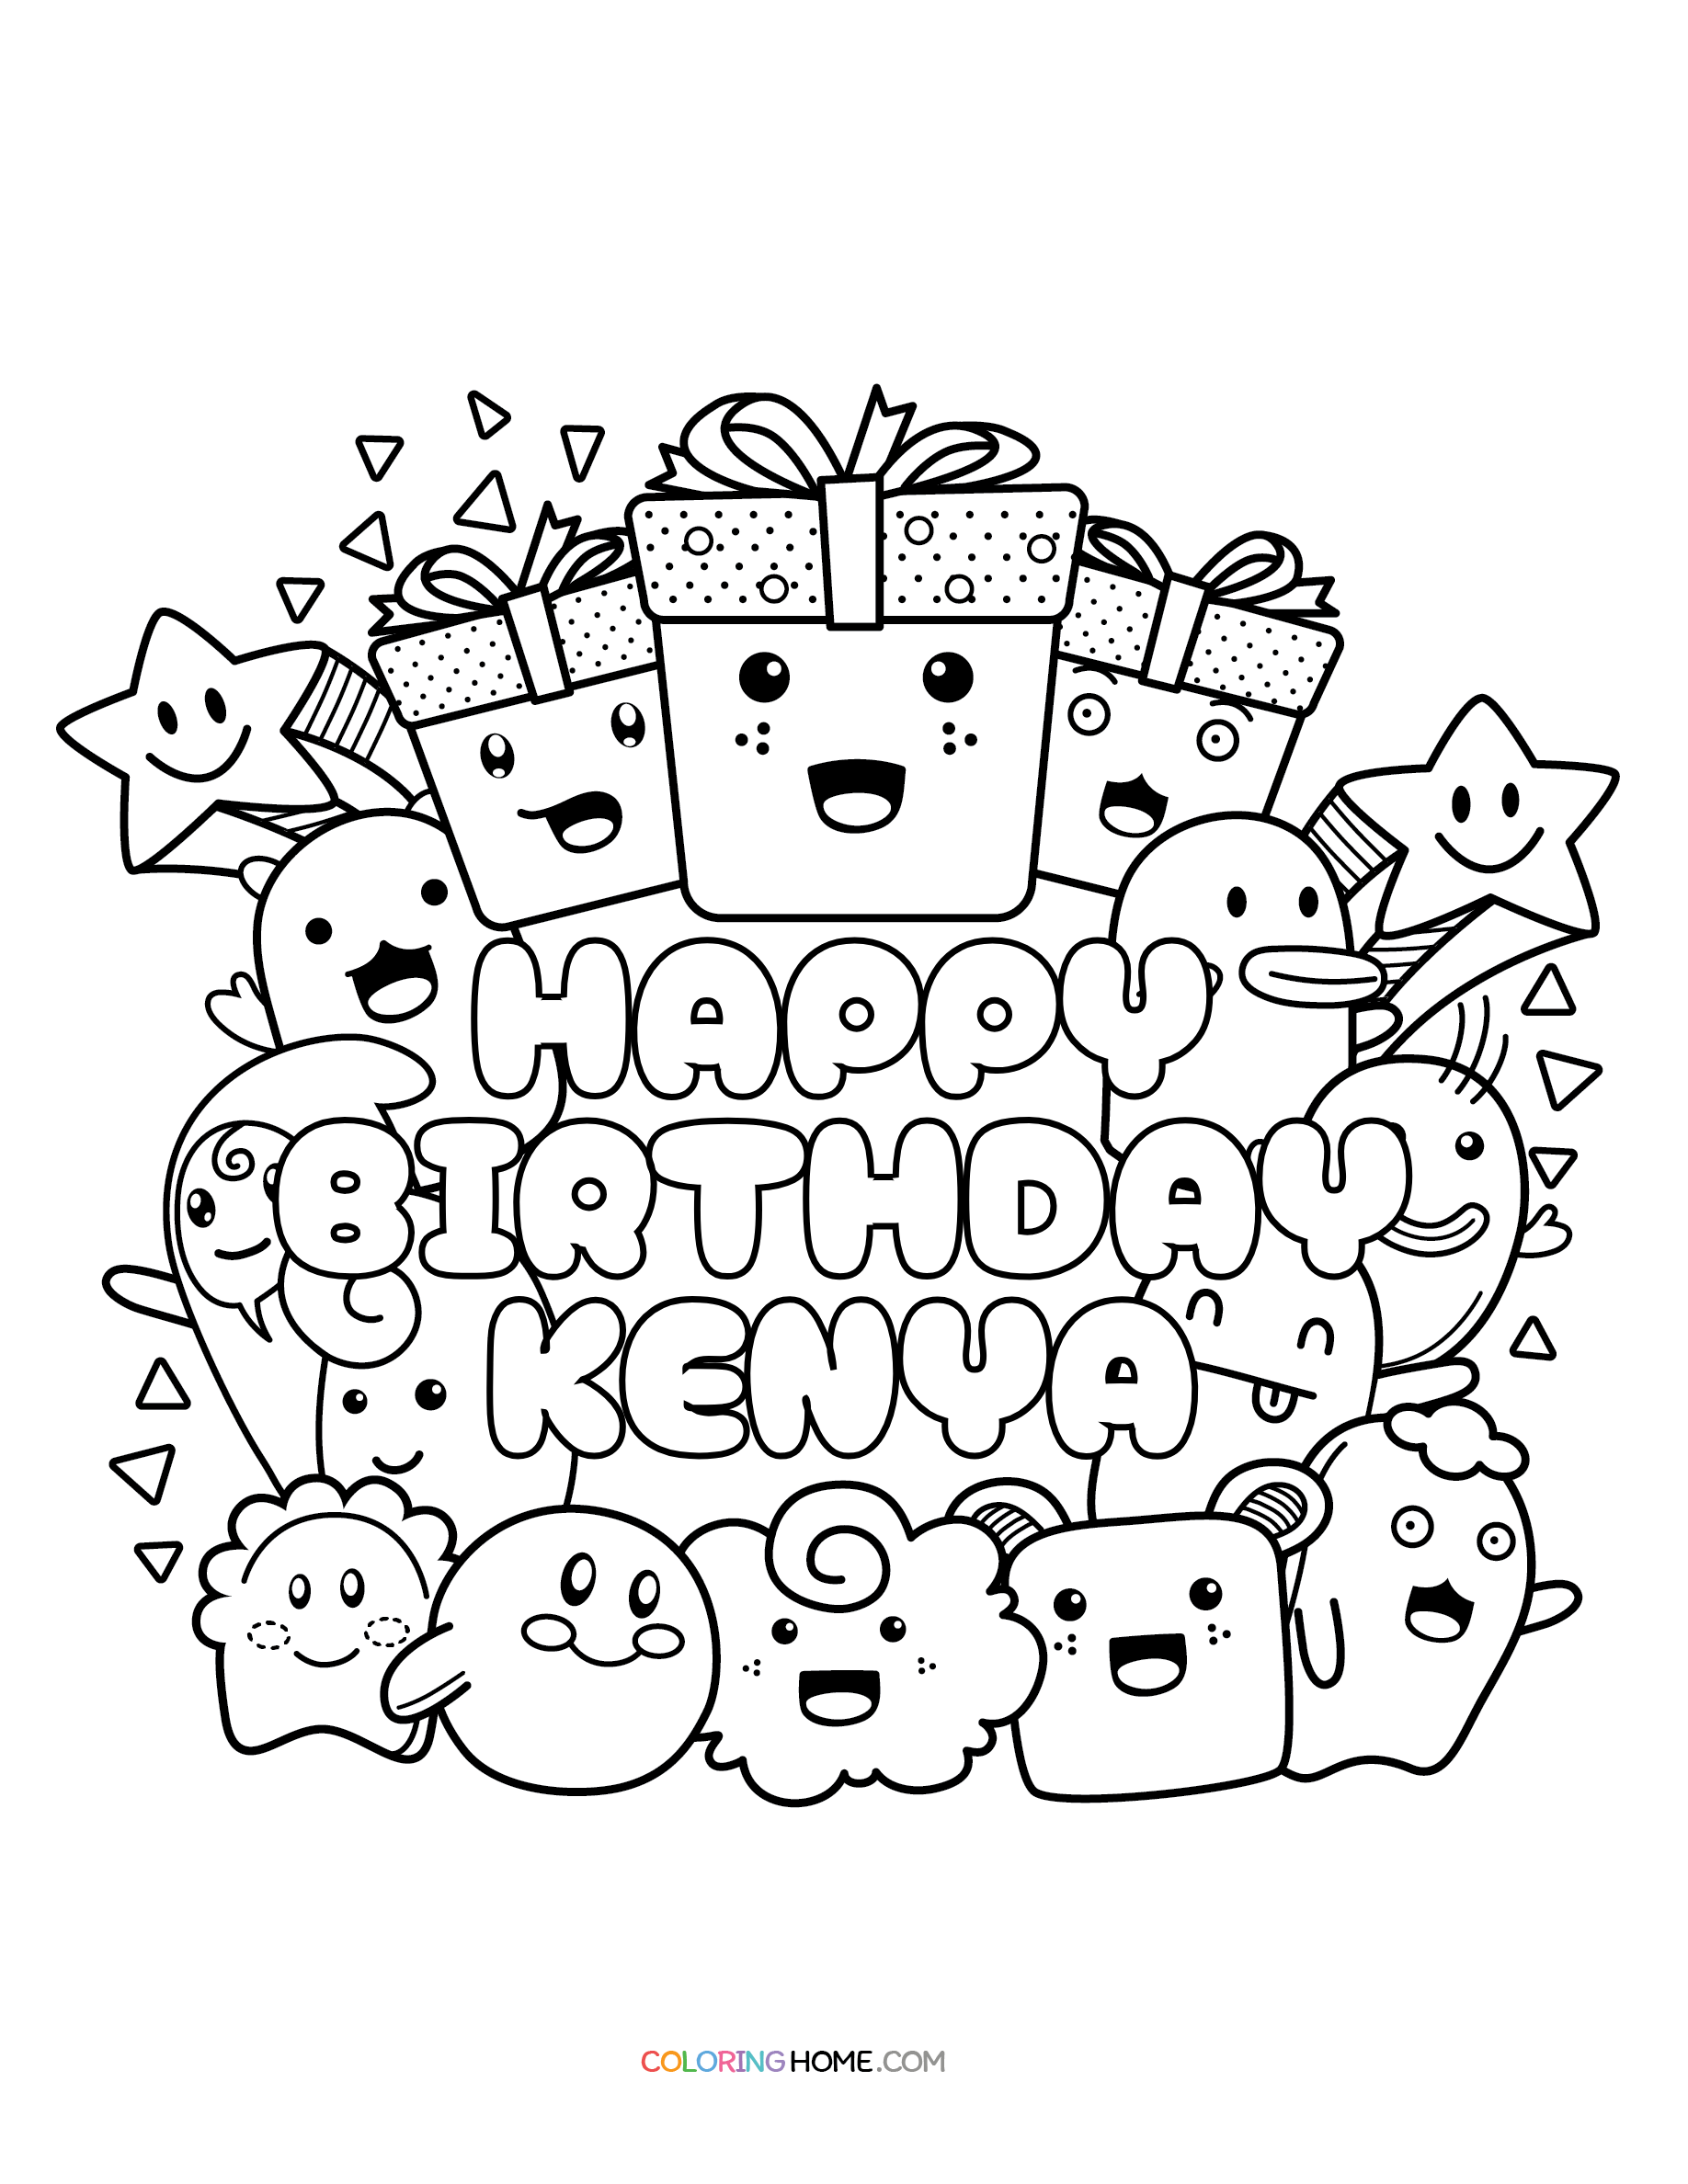 Happy Birthday Kenya coloring page